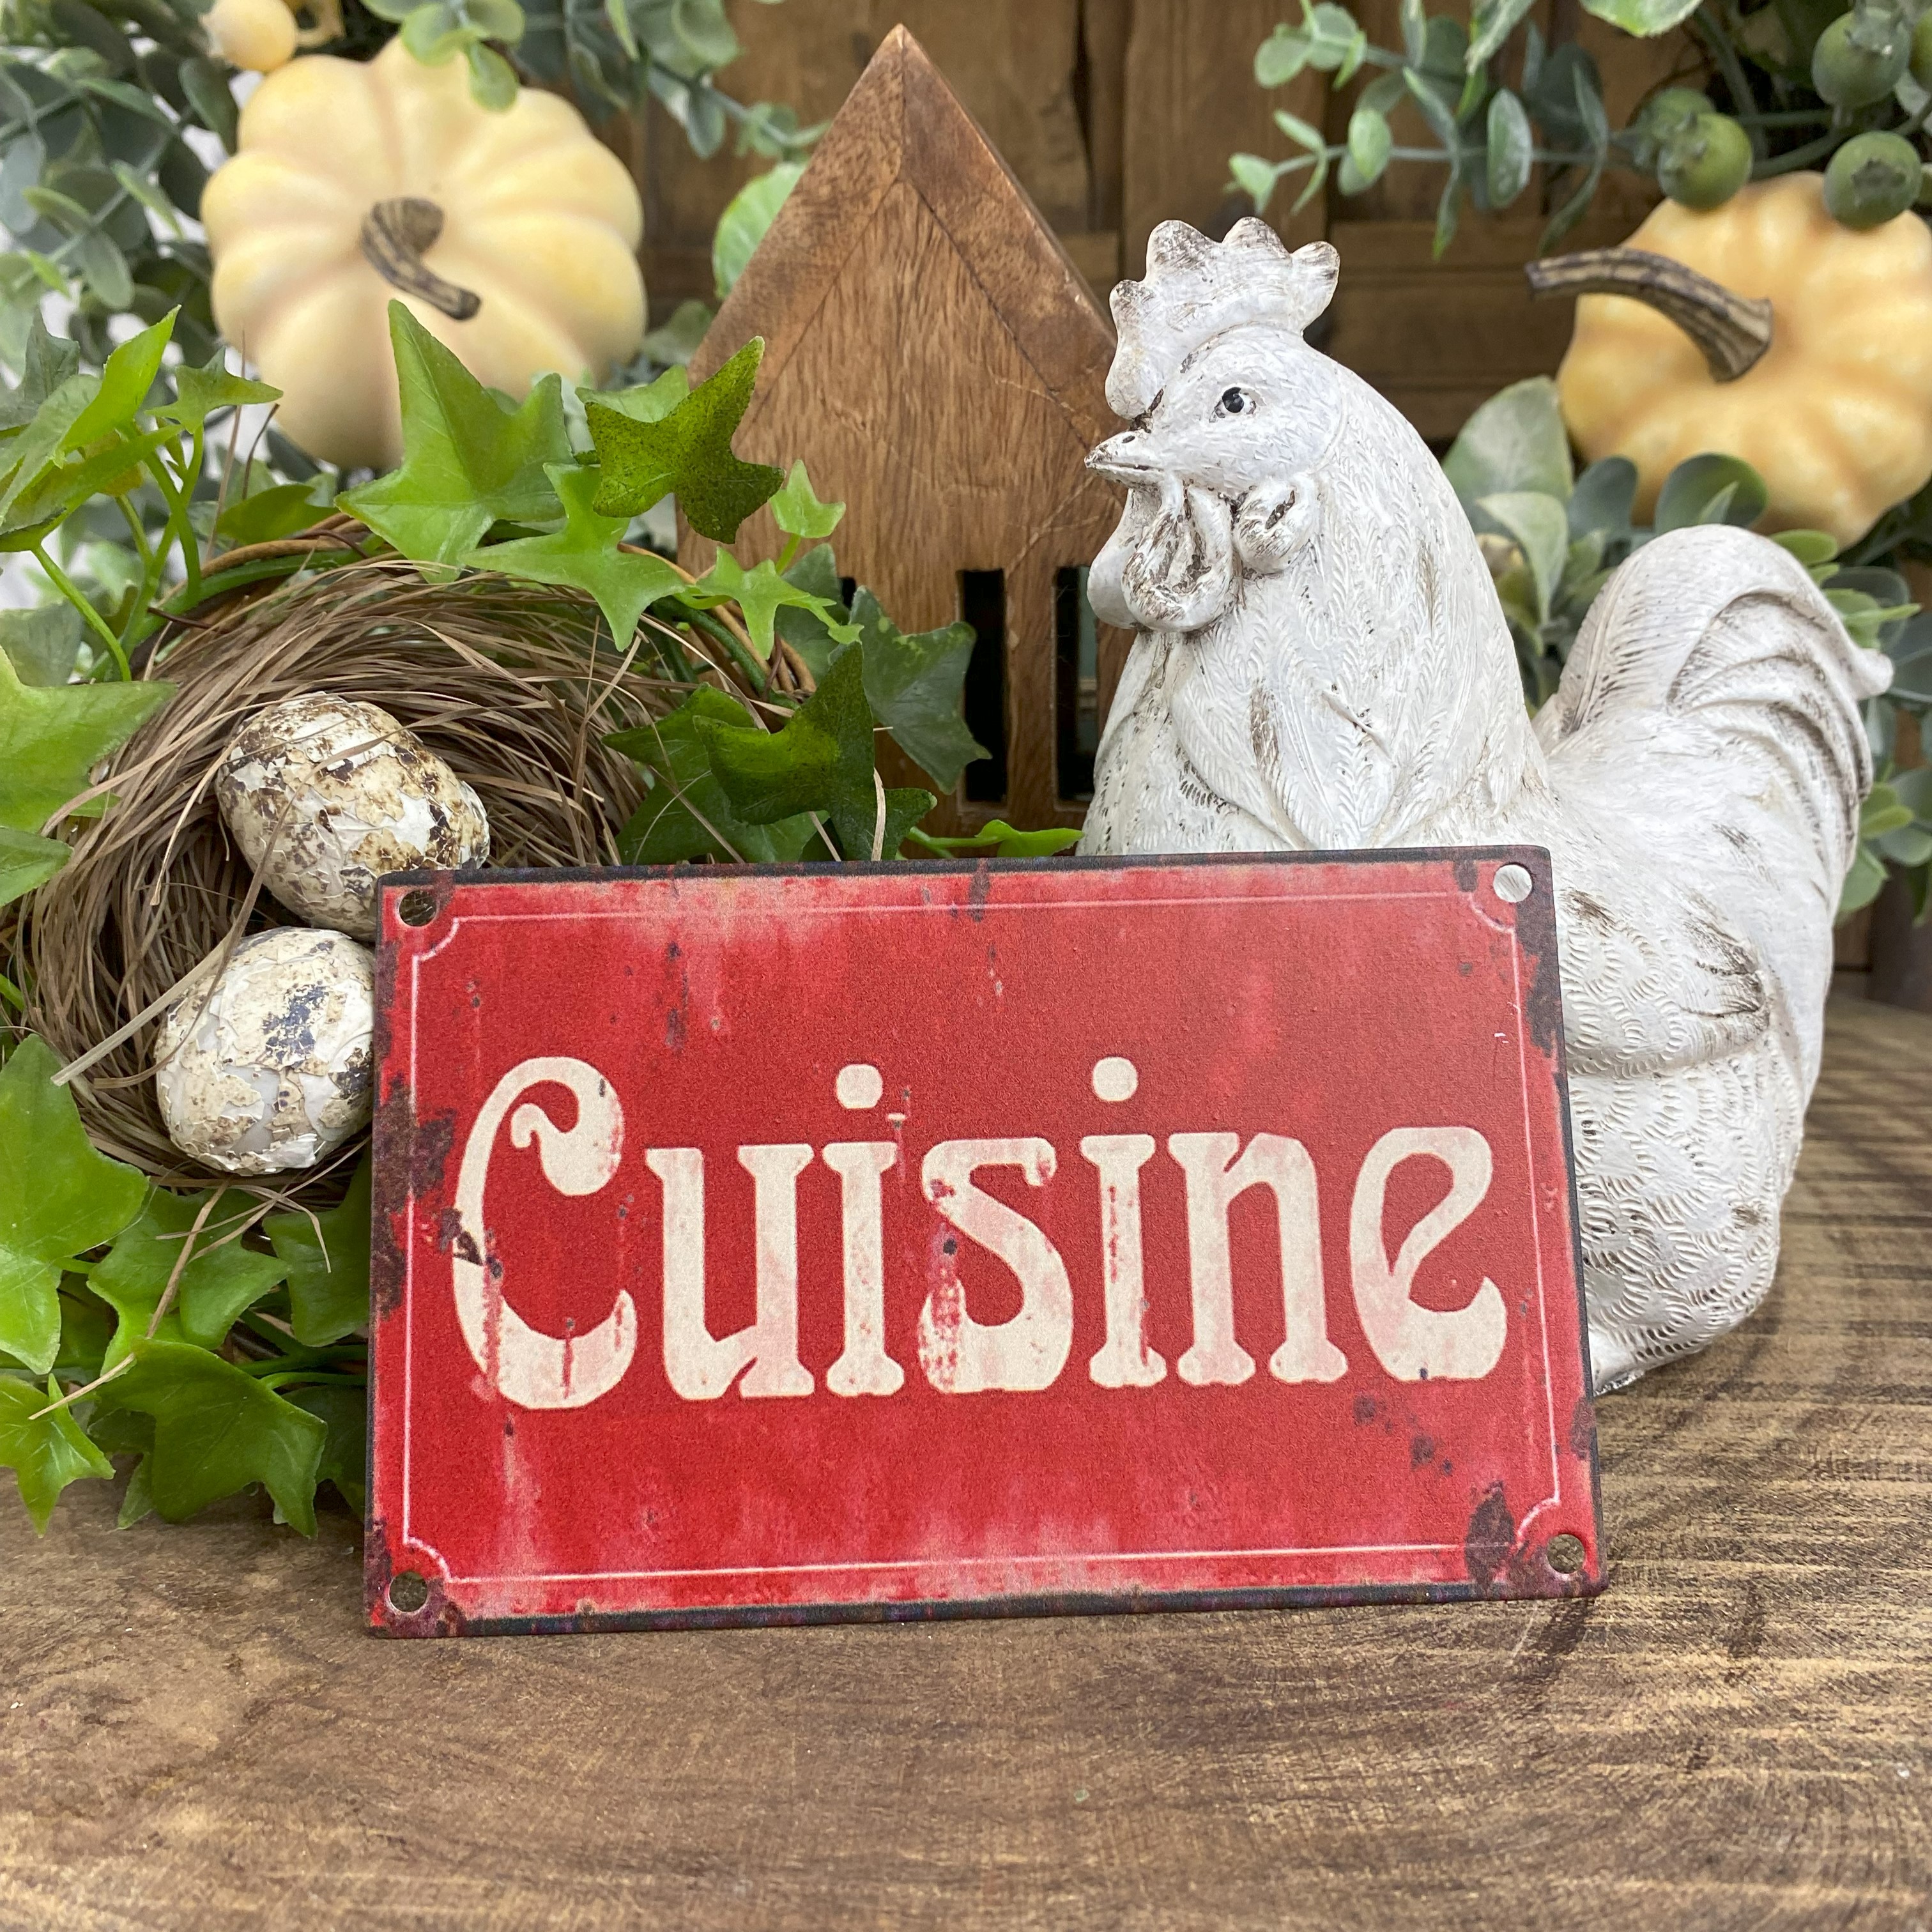 Vintage kovová tabuľka "Cuisene "  - Kuchyňa 